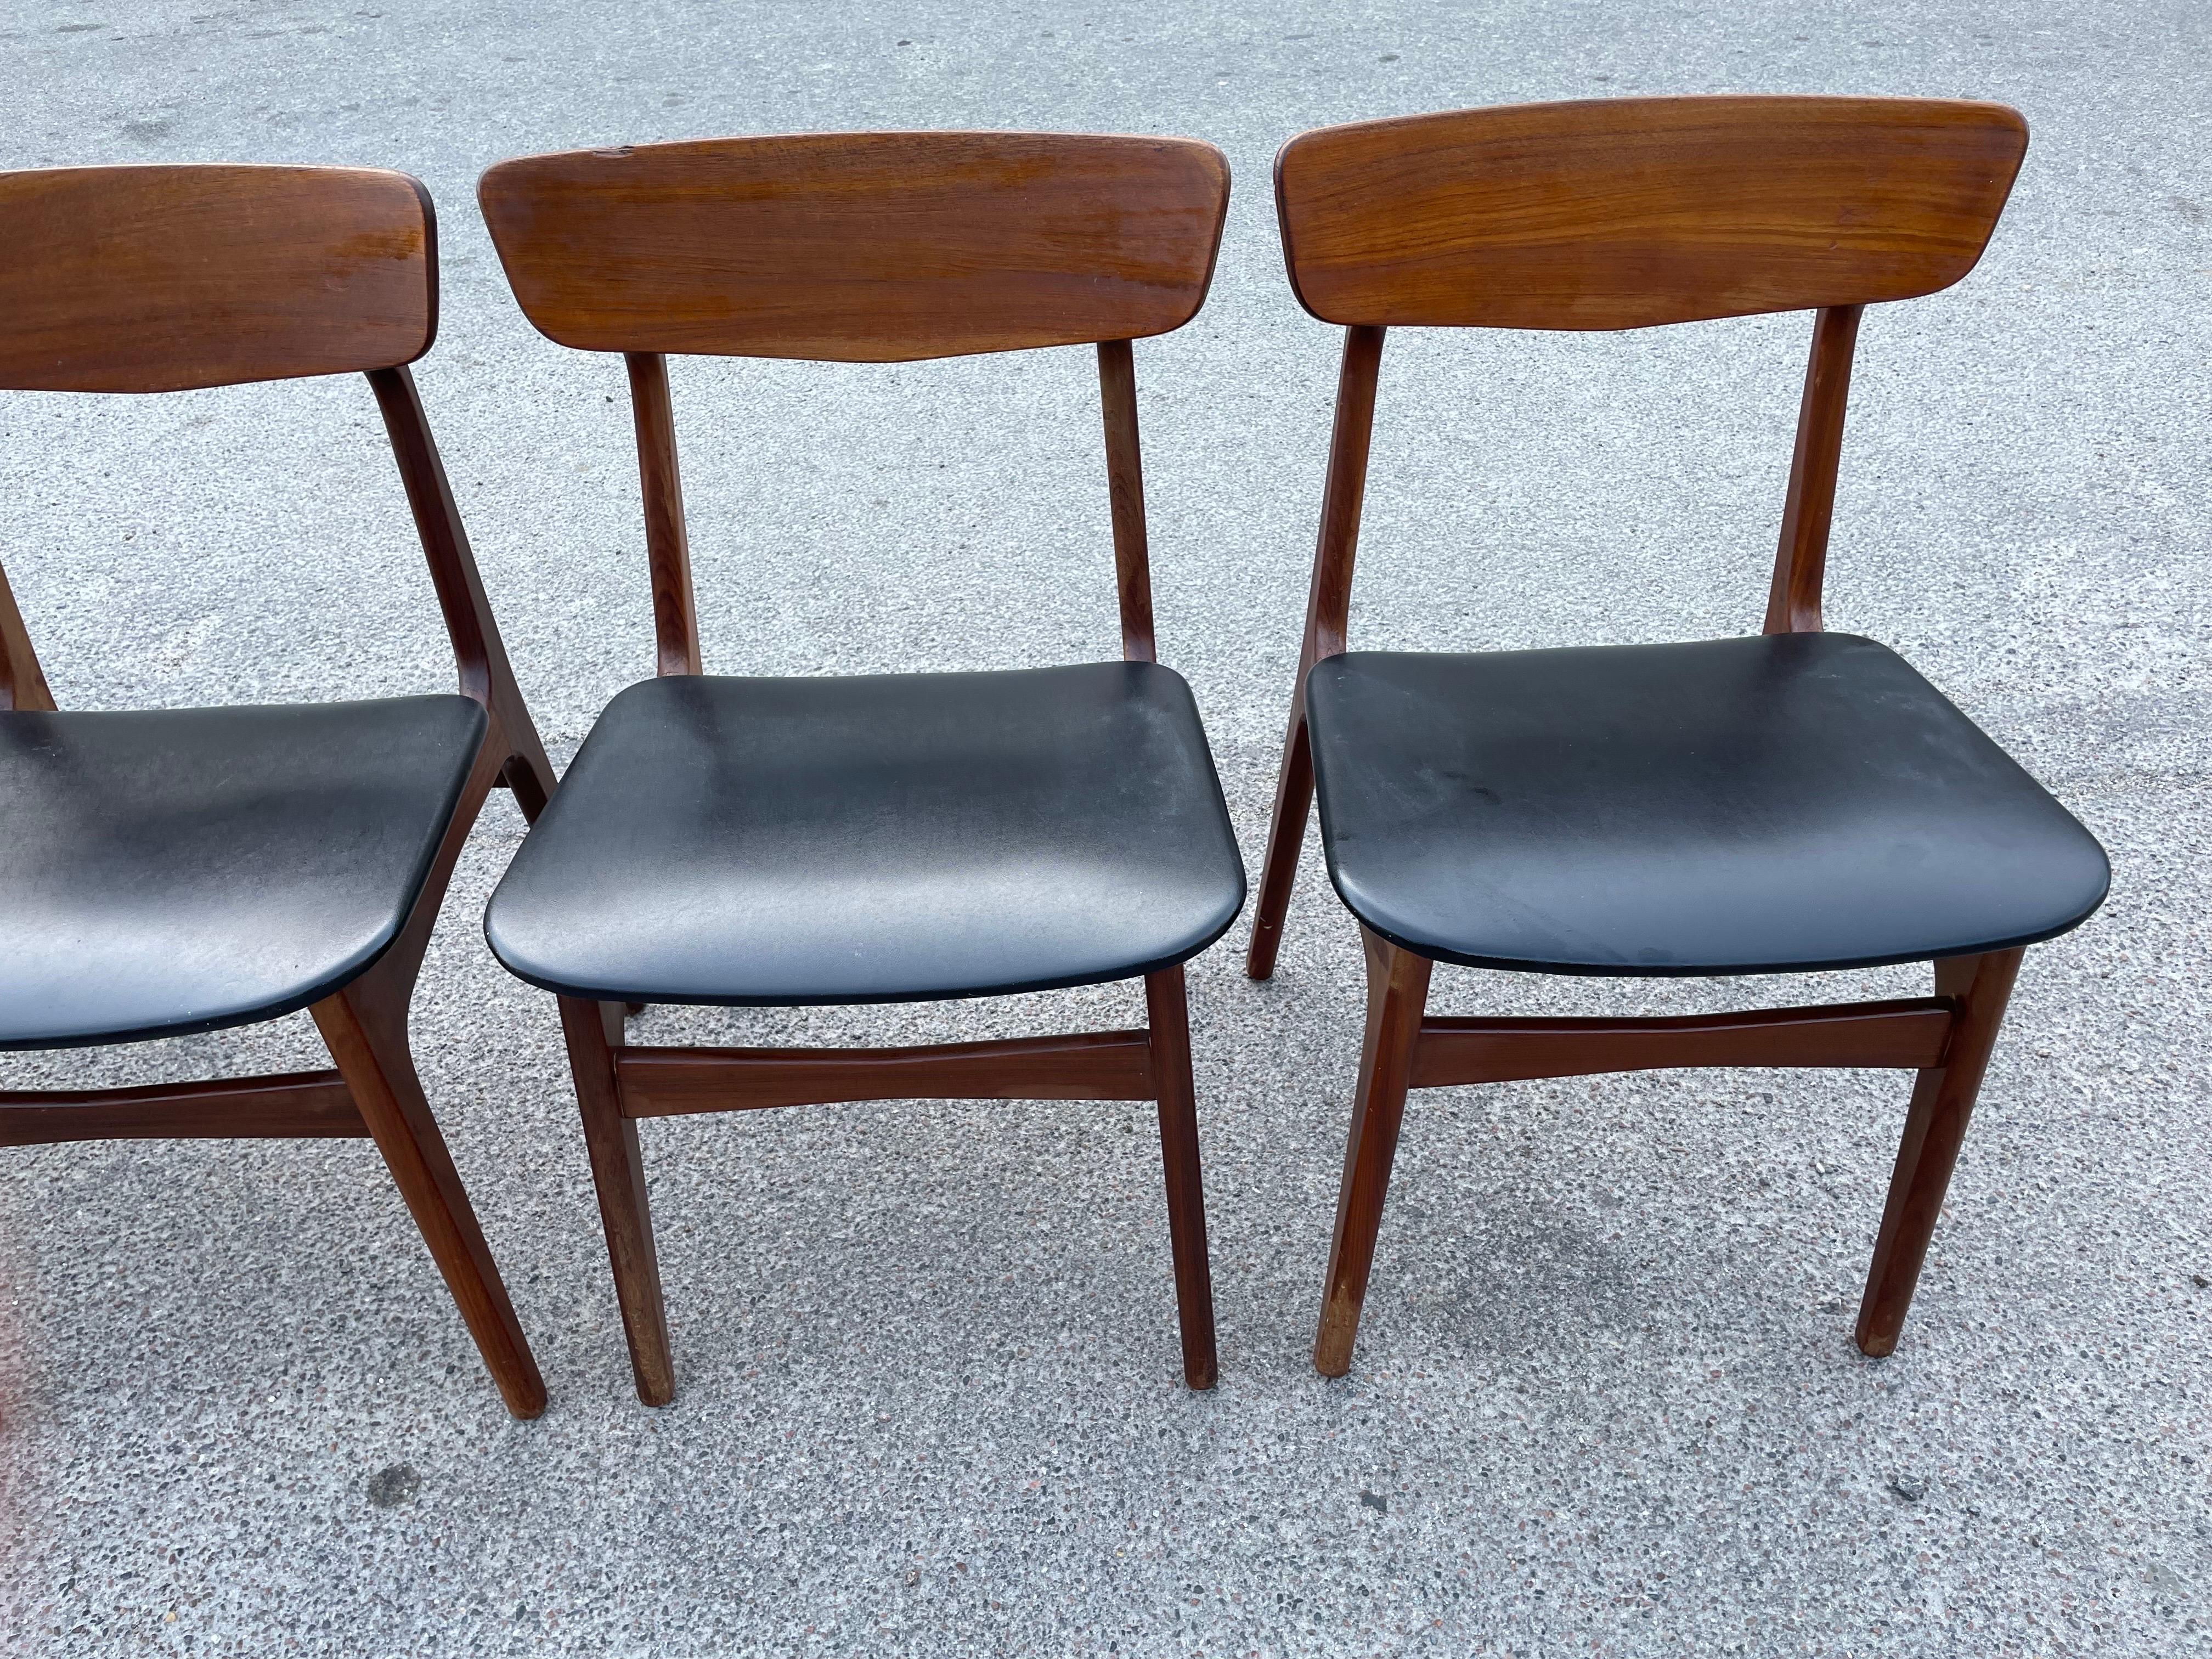 Set of 6 Midcentury Danish Chairs in Teak by Schiønning & Elgaard, 1960s For Sale 2